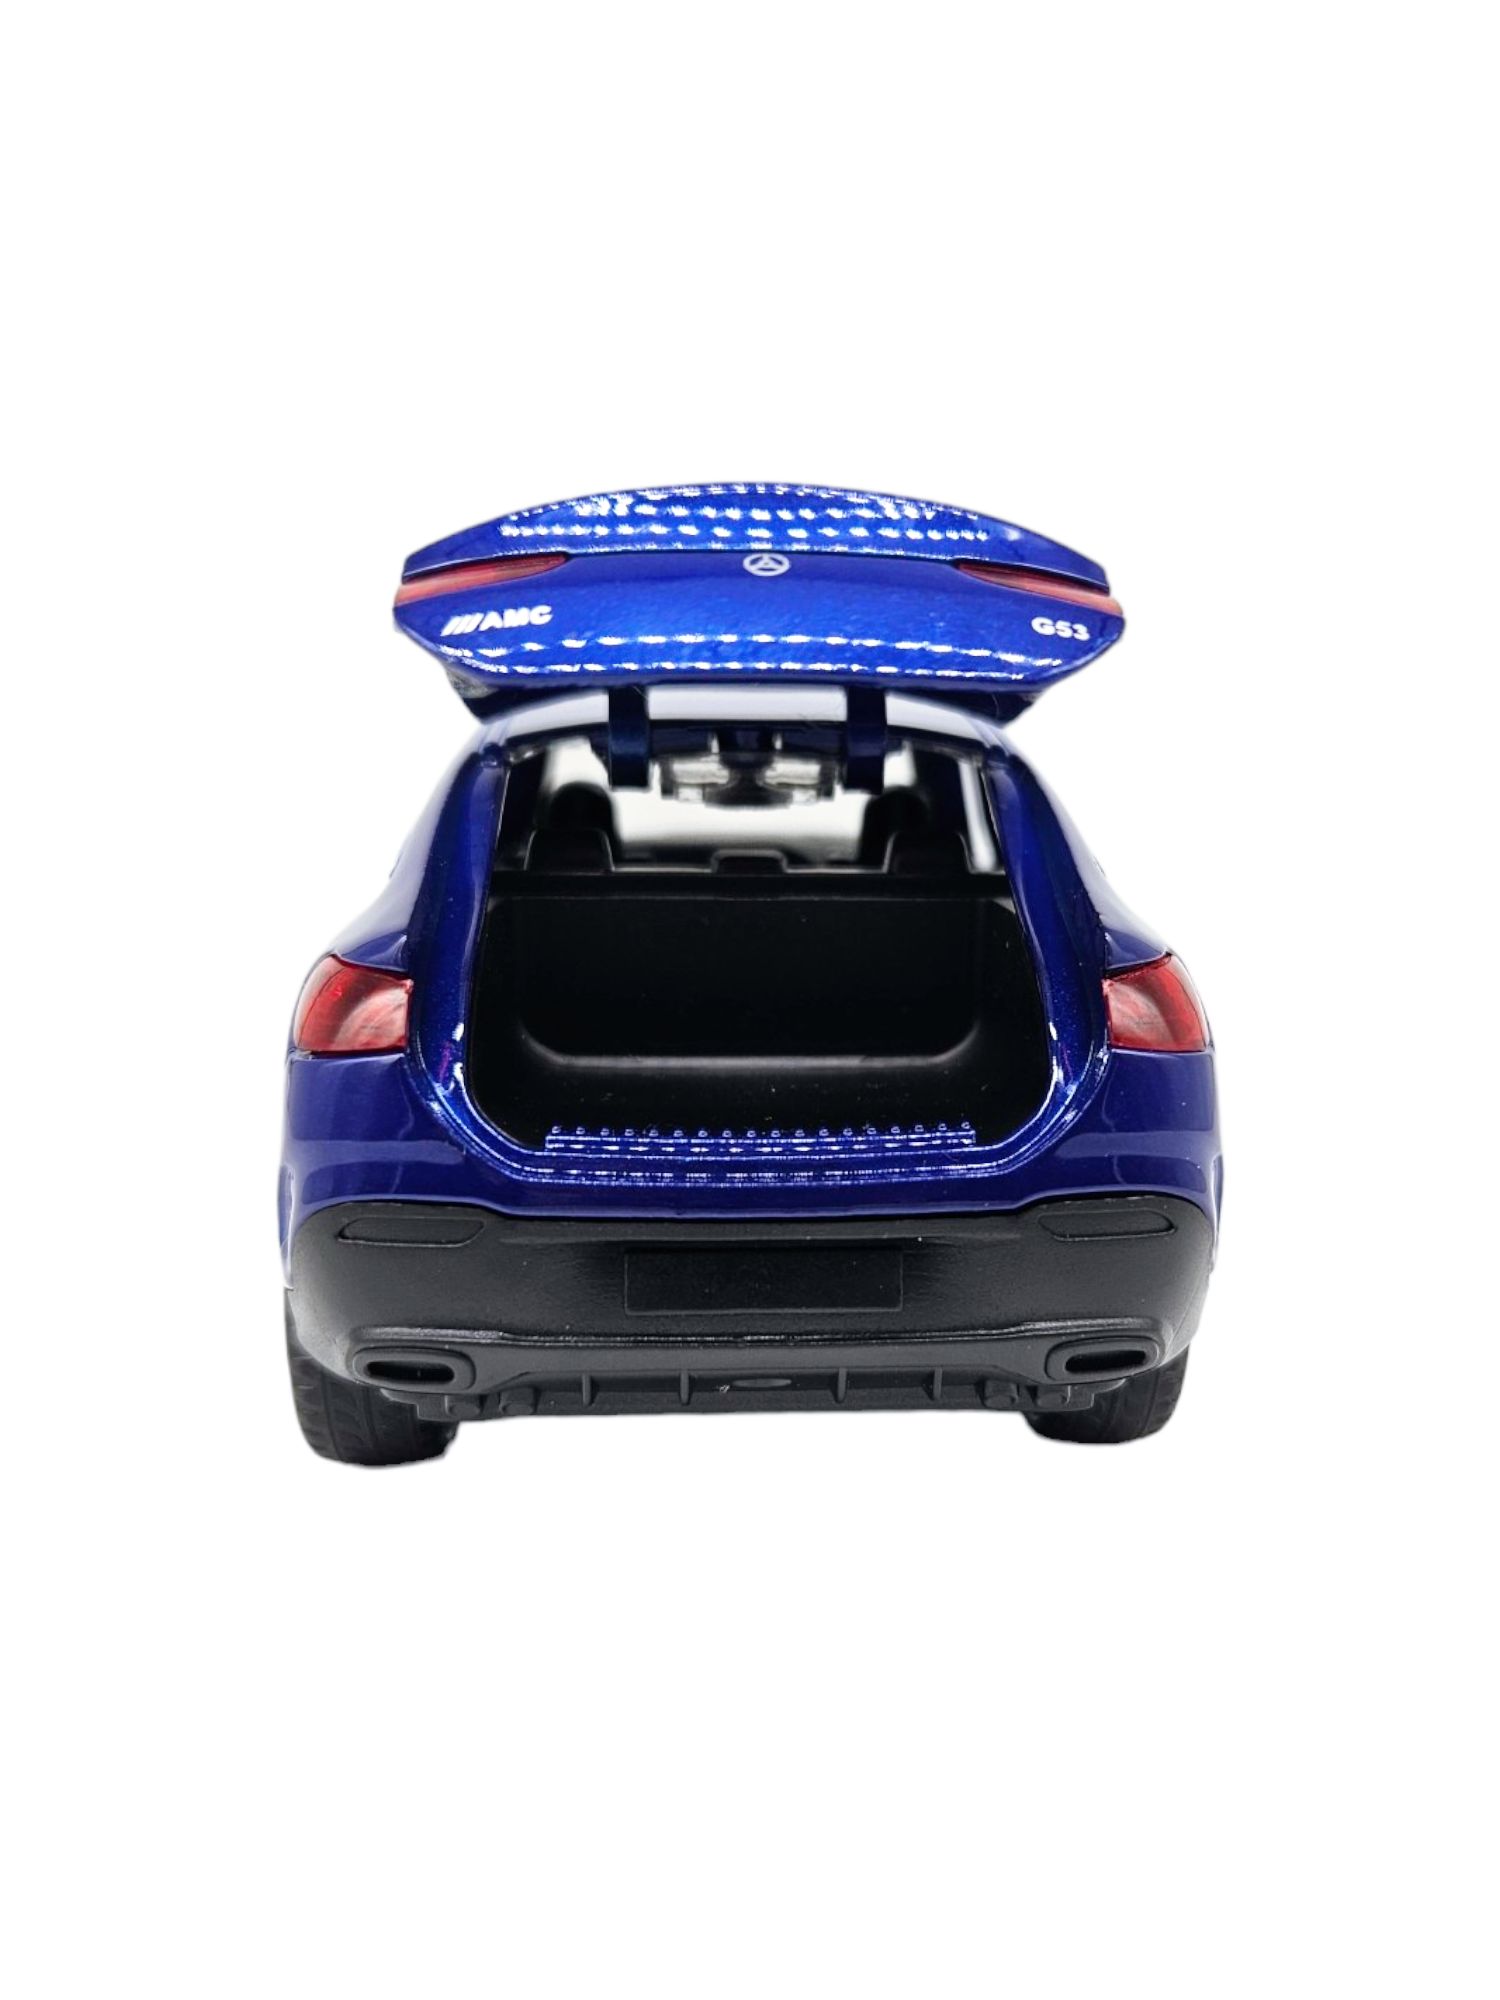 Masina metalica Mercedes GLE,sunete,lumini,usi mobile,16cm,Albastru